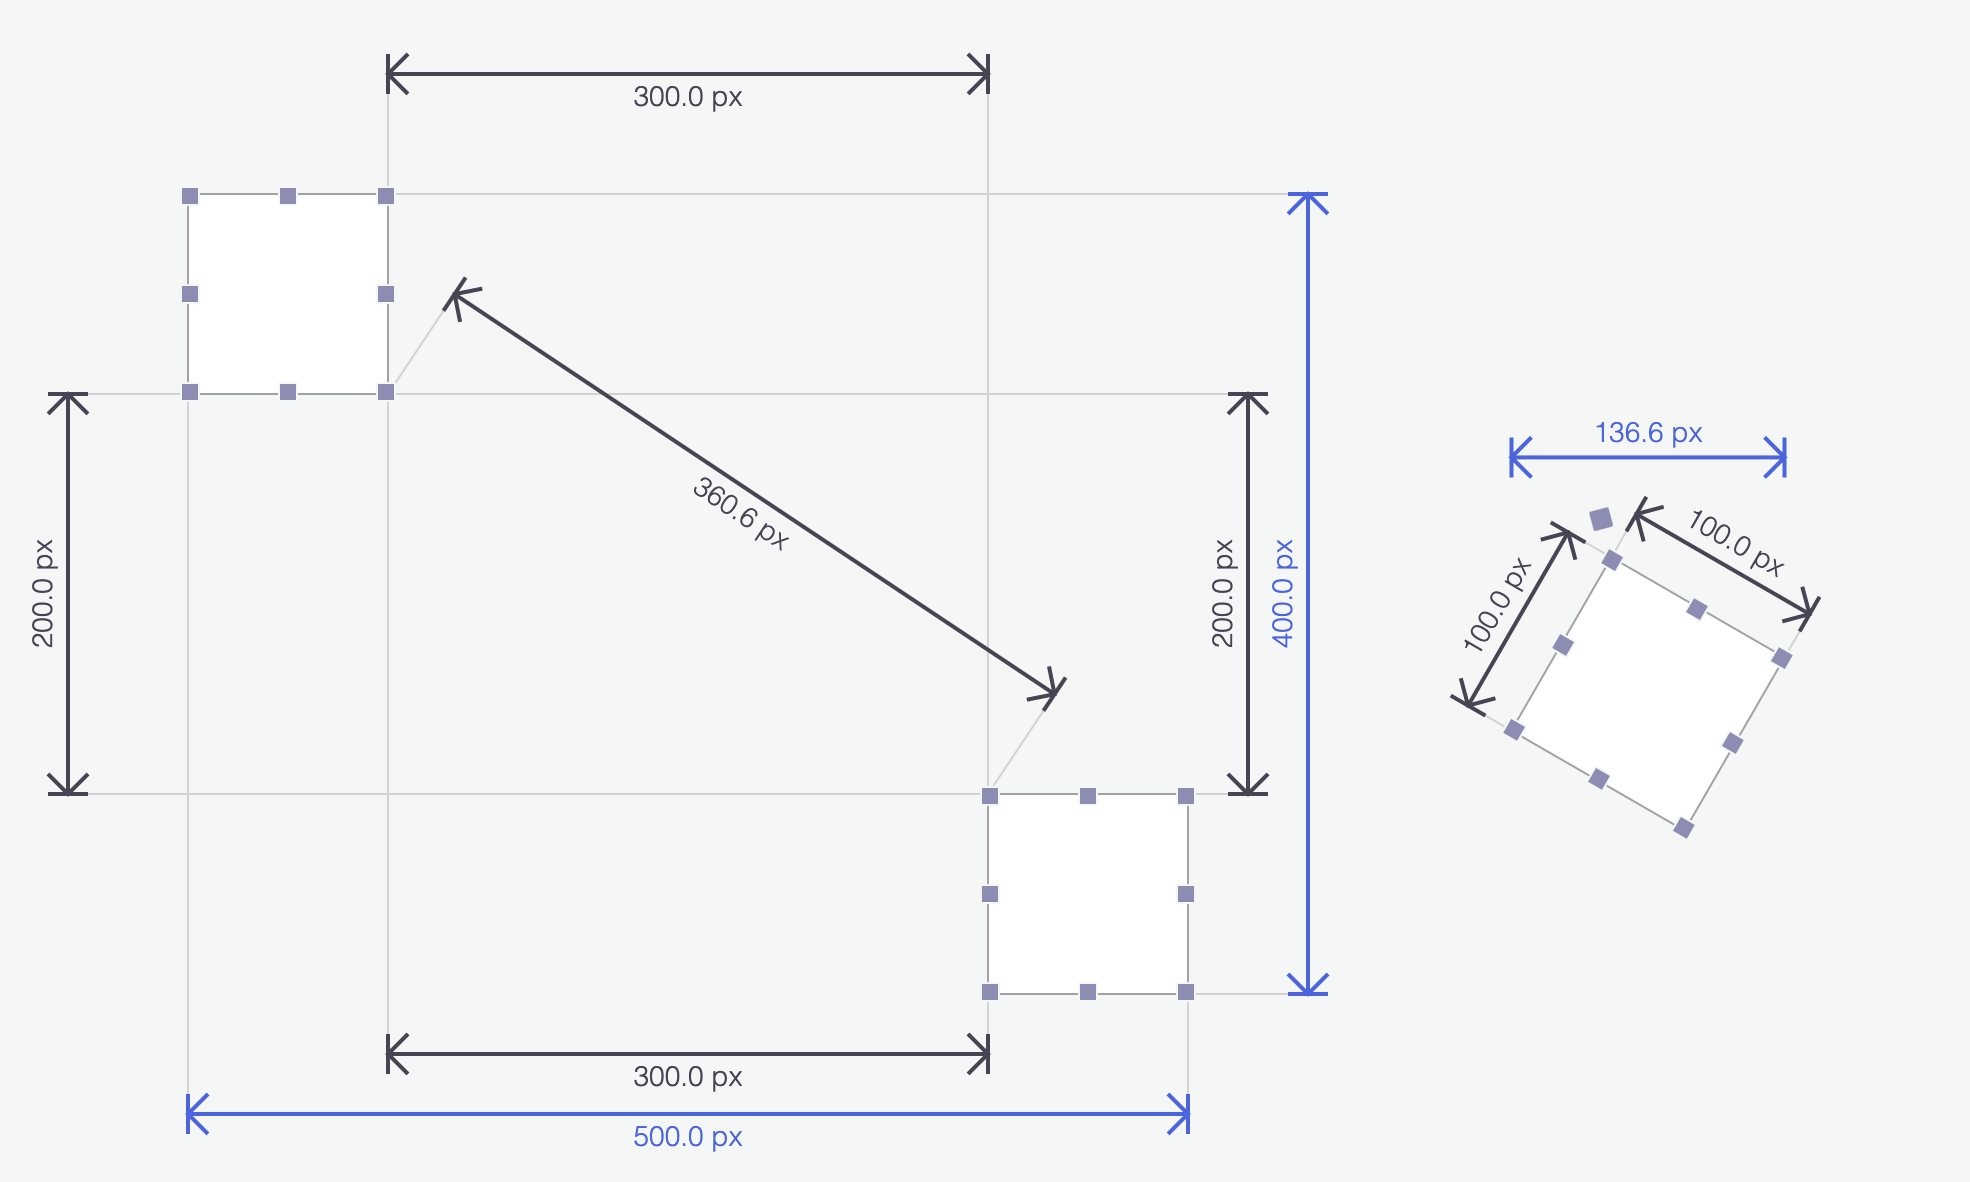 Rappid diagramming toolkit: Distances demo